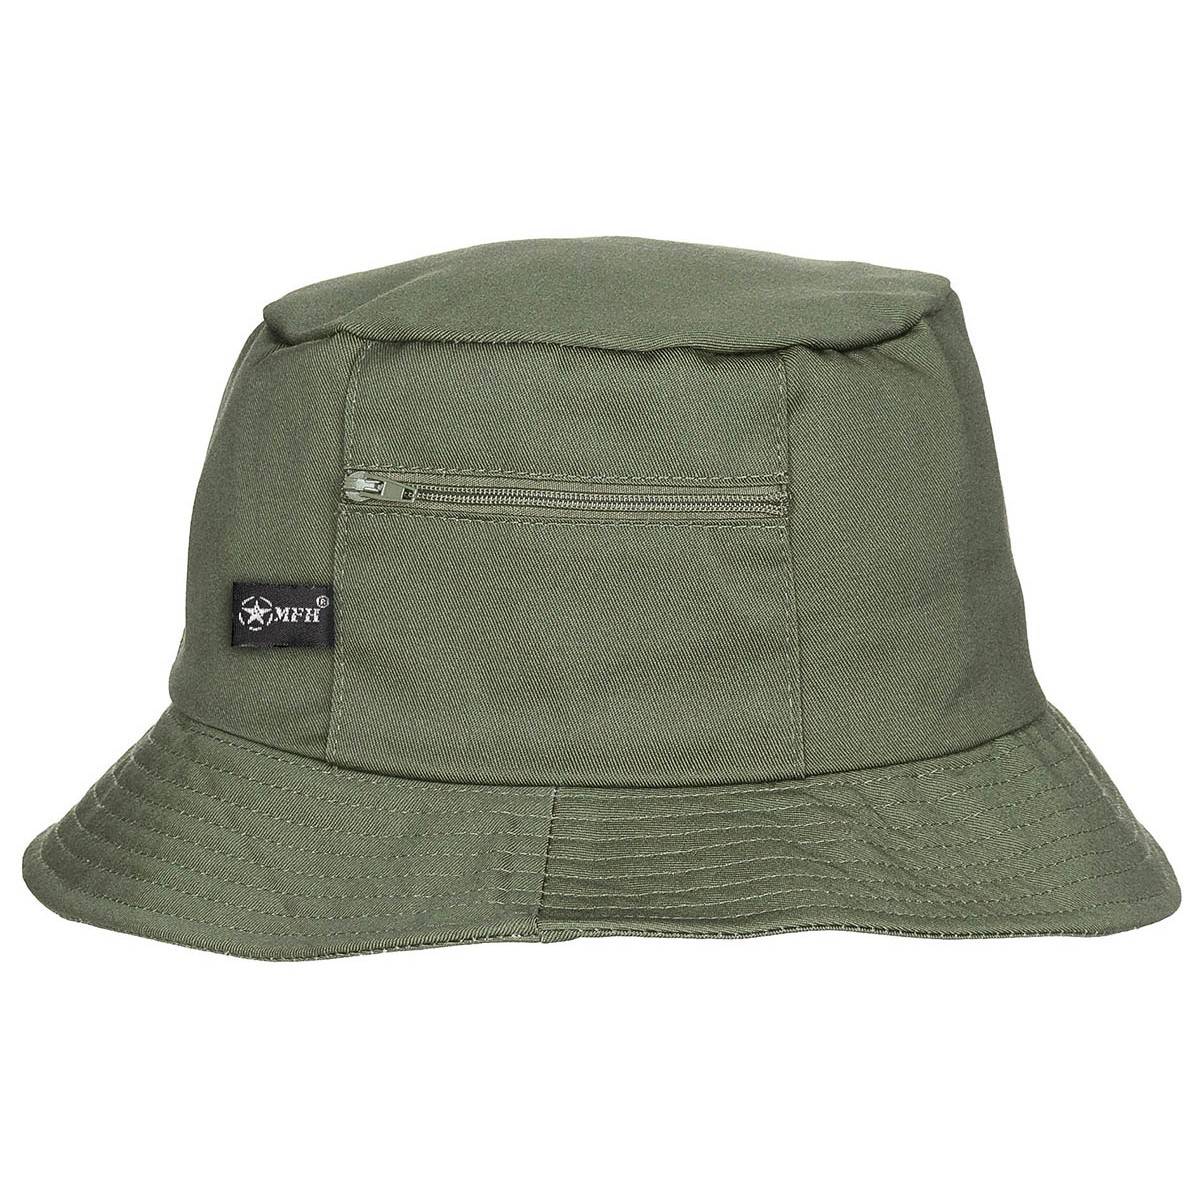 Fisher Hat, OD green, small side pocket | Apparel \ Headwear \ Boonies ...